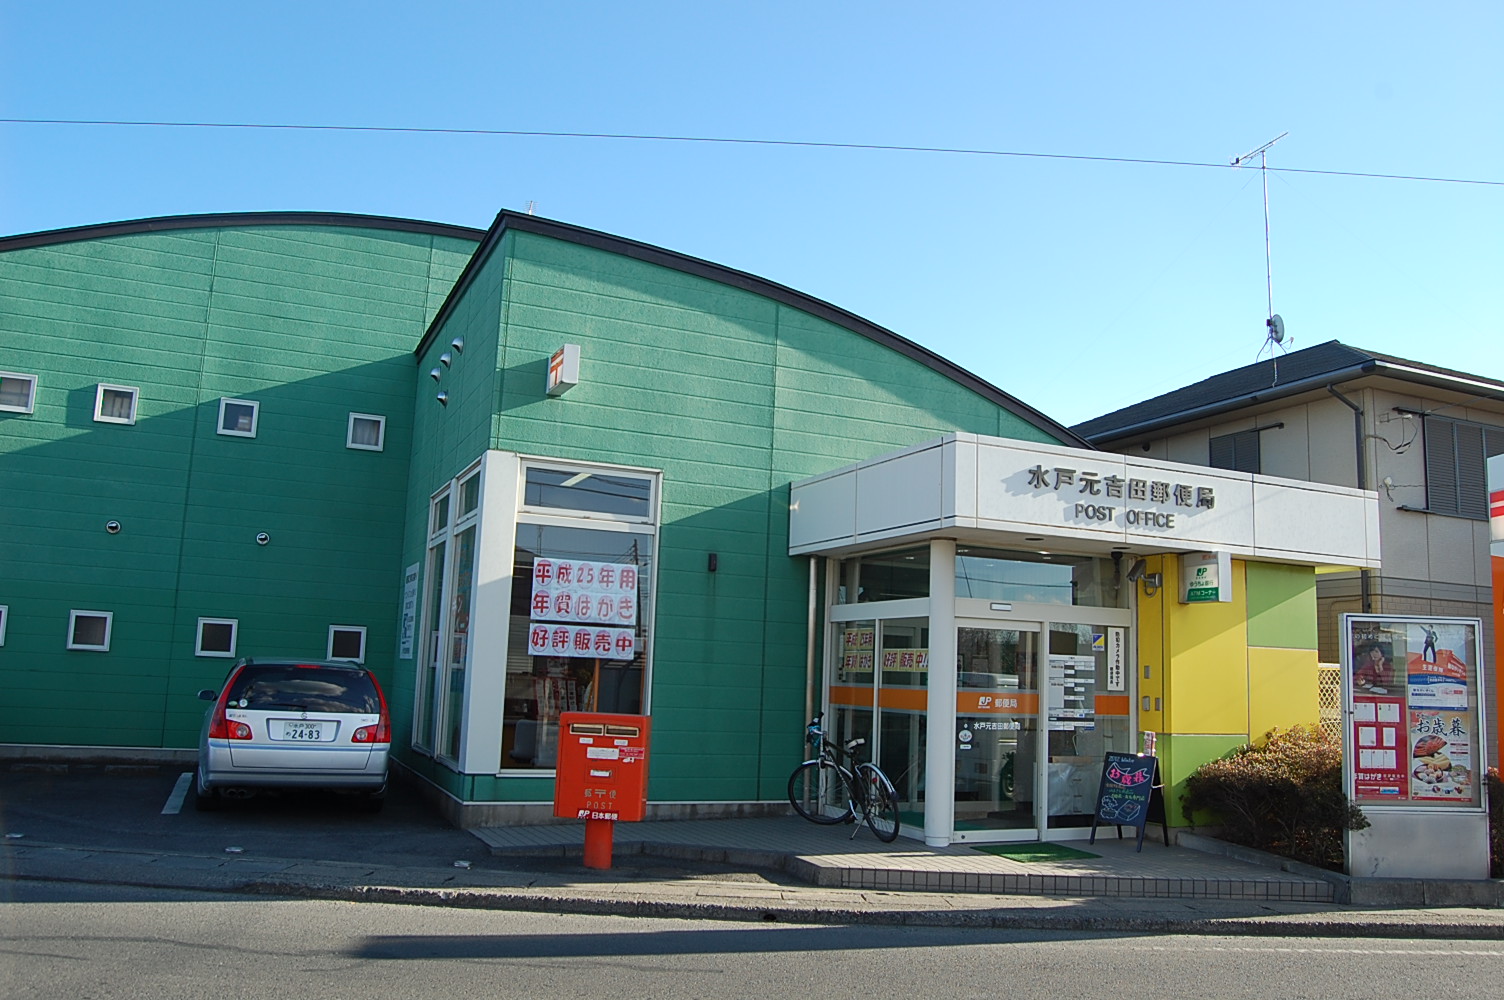 post office. 762m until Mito Motoyoshida post office (post office)